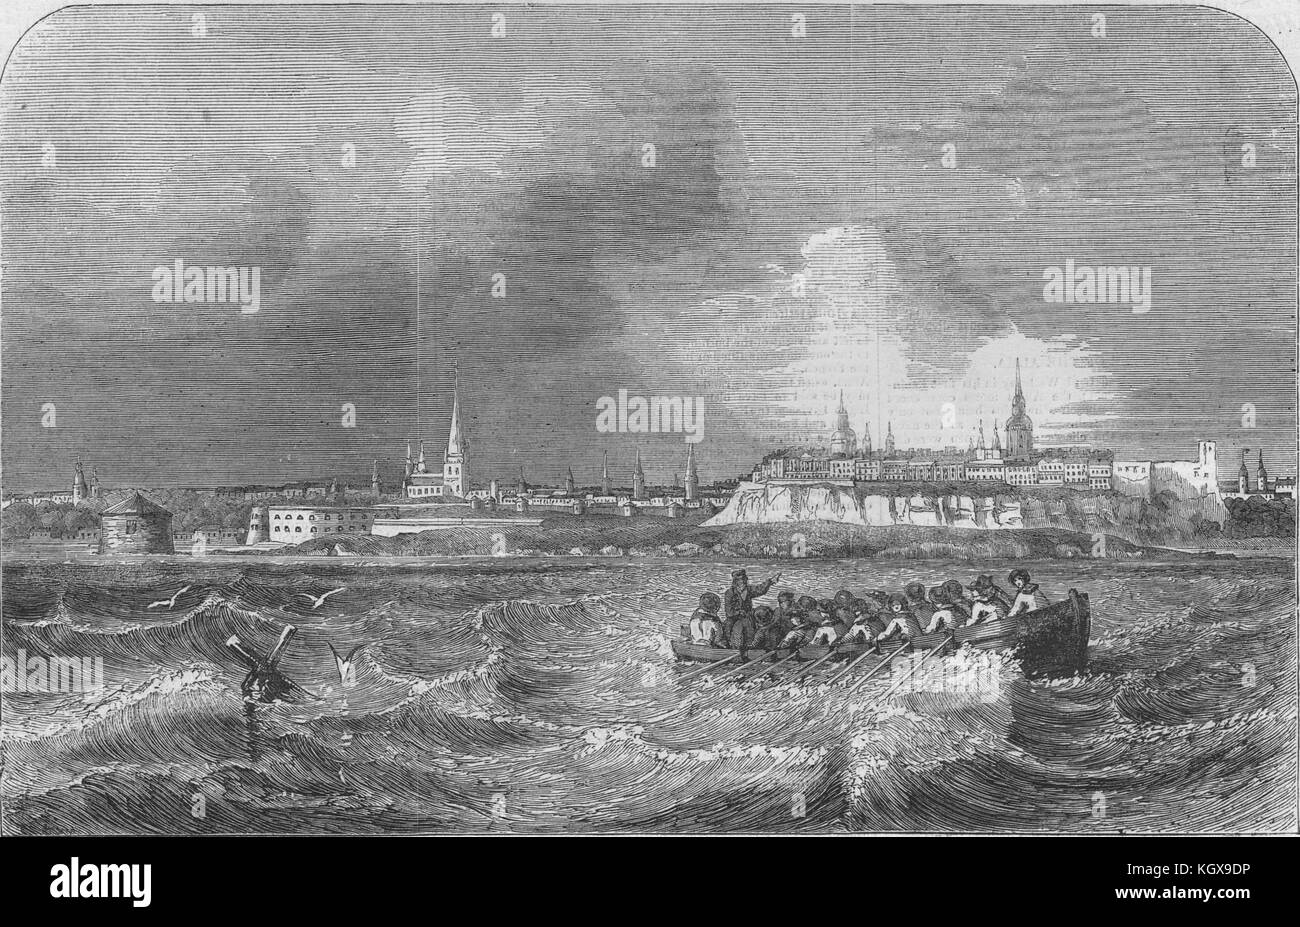 Tallinn en la entrada sur del Golfo de Finlandia. Estonia 1856. El Illustrated London News Foto de stock